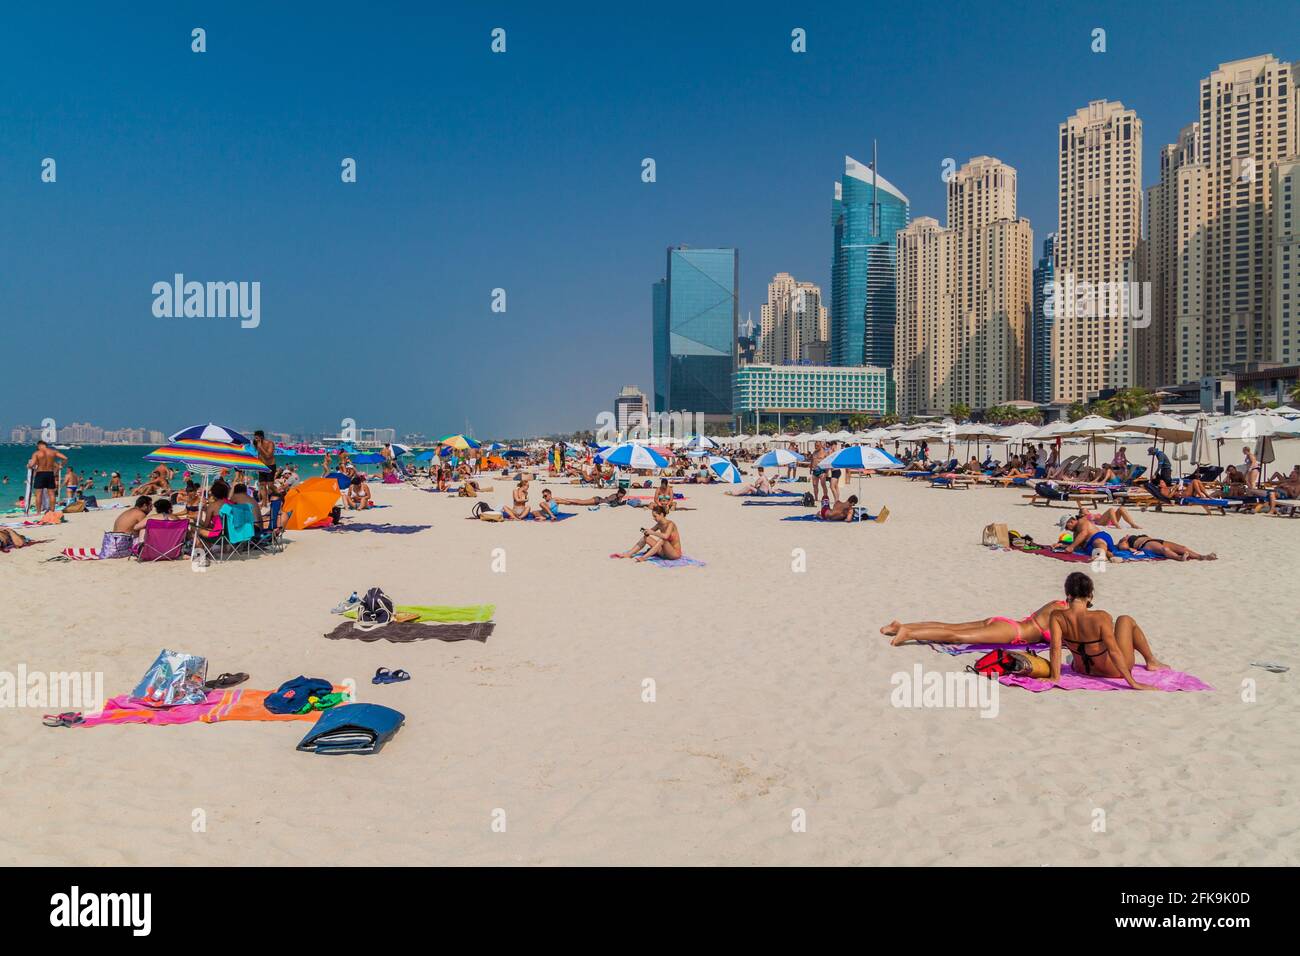 DUBAI, UAE - OCTOBER 21, 2016: People at Marina Beach in Dubai, United Arab Emirates. Jumeirah Beach Residence complex in the background. Stock Photo